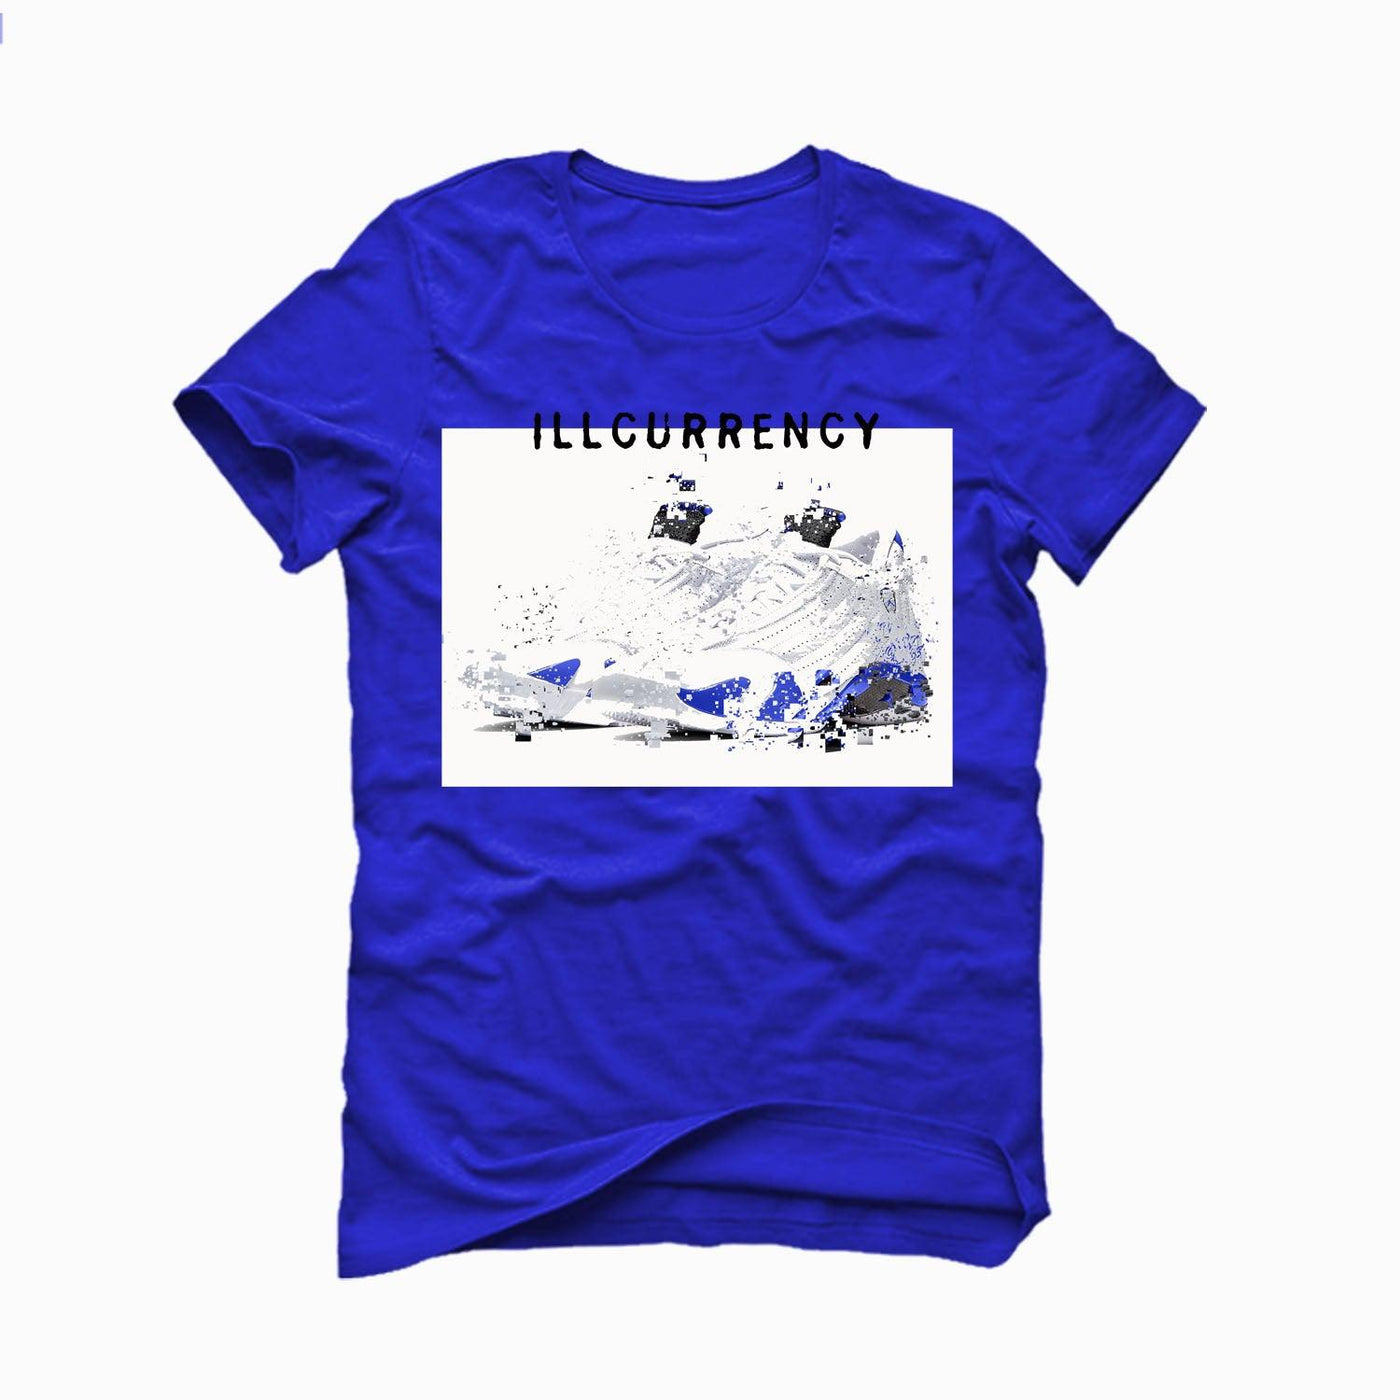 AIR JORDAN 14 “HYPER ROYAL” Royal Blue T-Shirt (Shattered kicks) - illCurrency Sneaker Matching Apparel